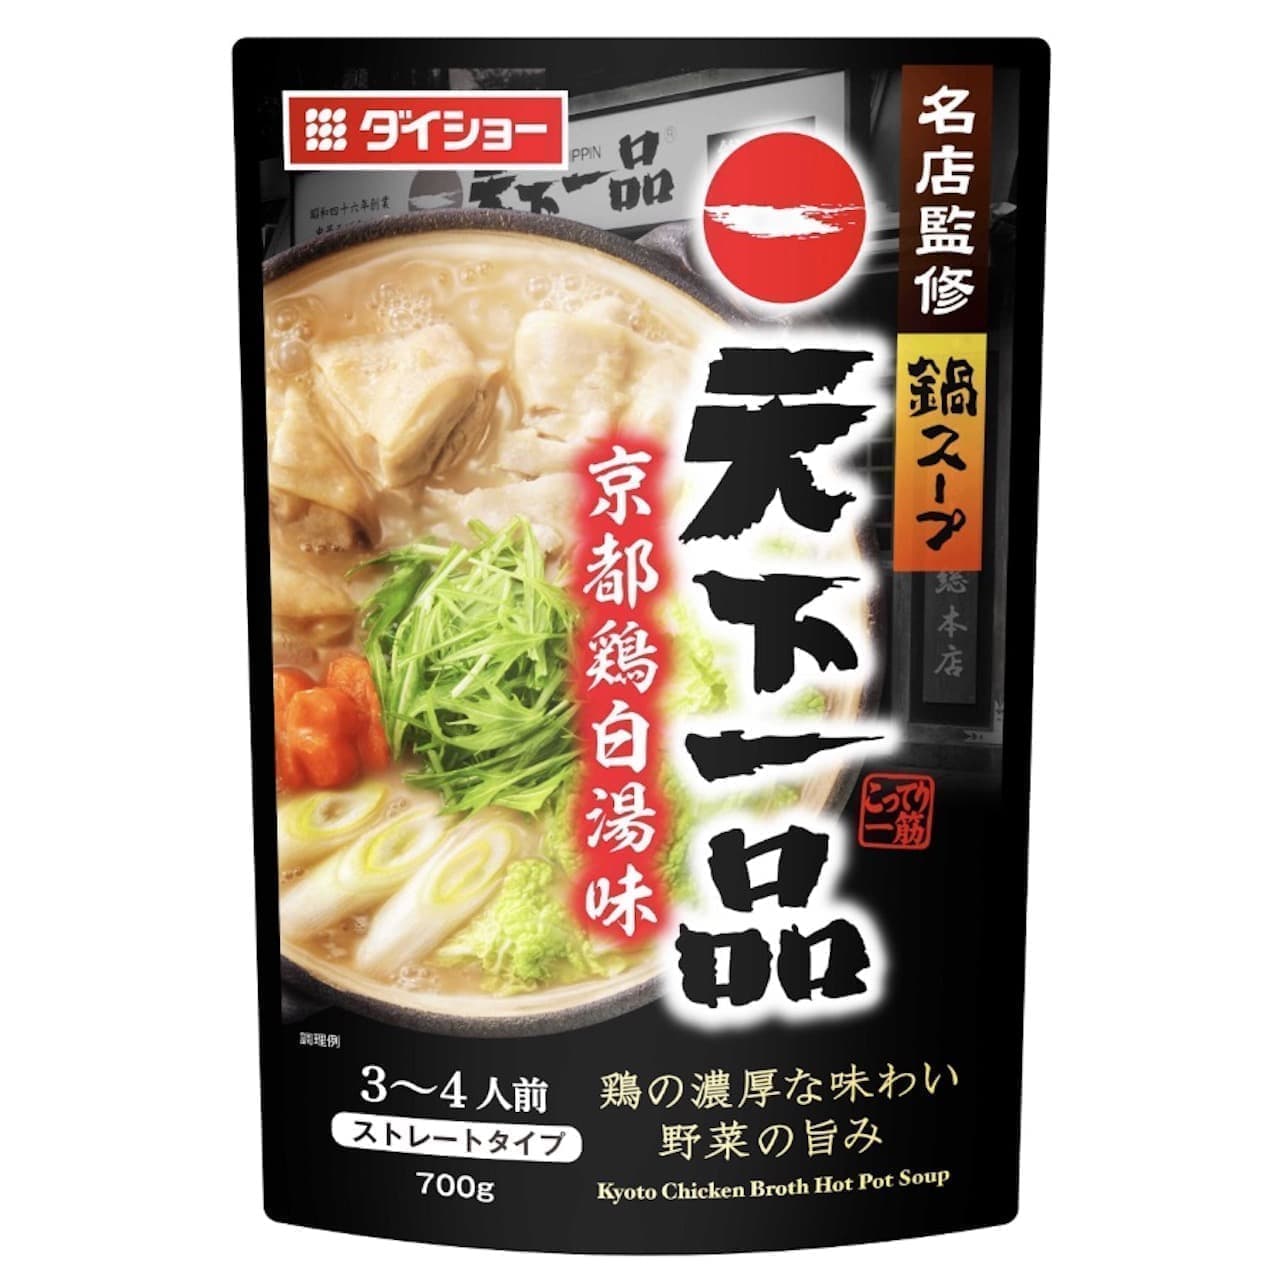 Daisho "Tenka Ippin Kyoto Chicken Shiratsuyu Aji" (hot pot soup supervised by a famous restaurant)